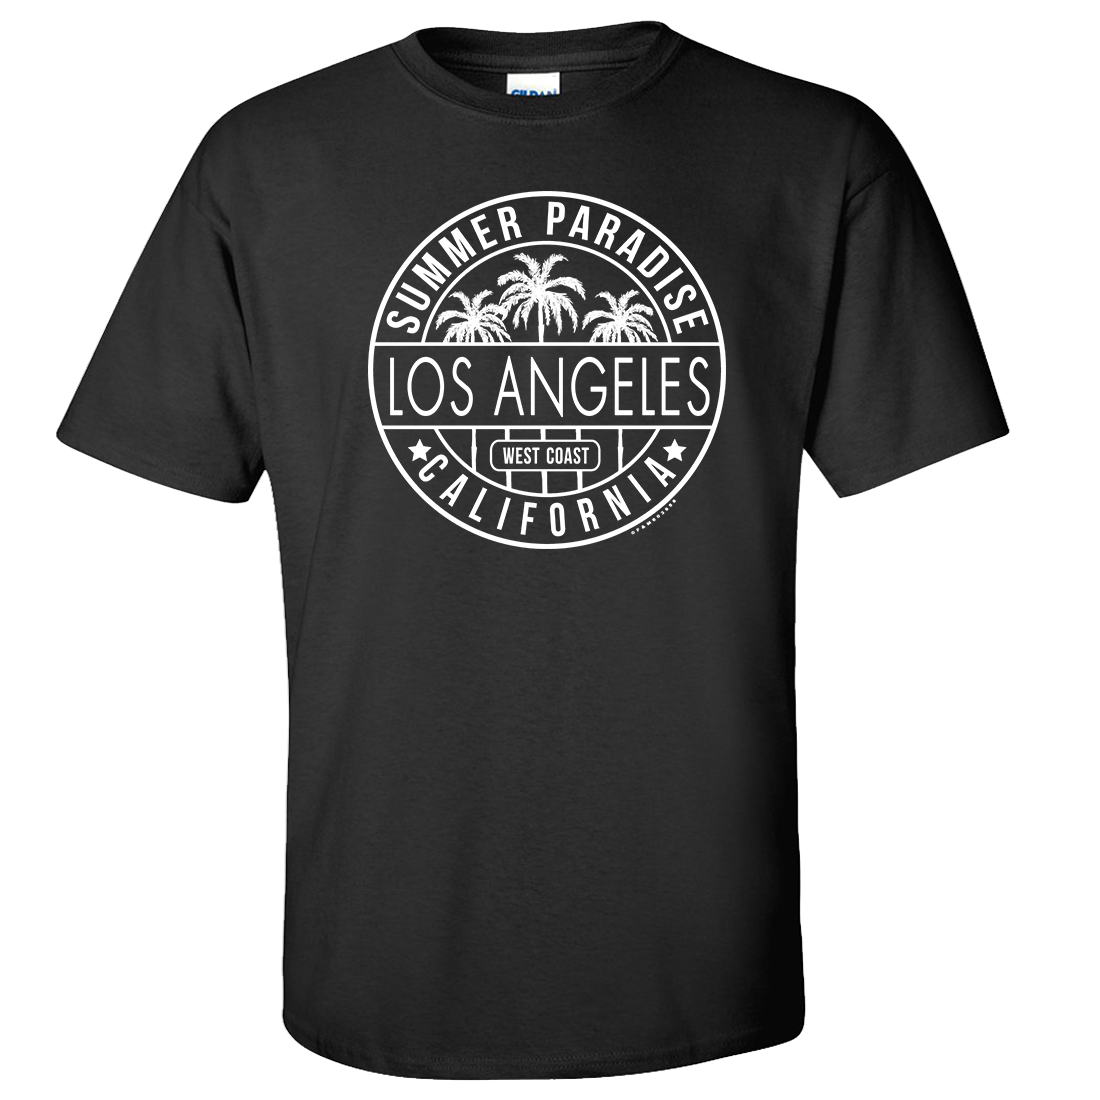 T-Shirts - Unisex Sizing - California Republic Clothes